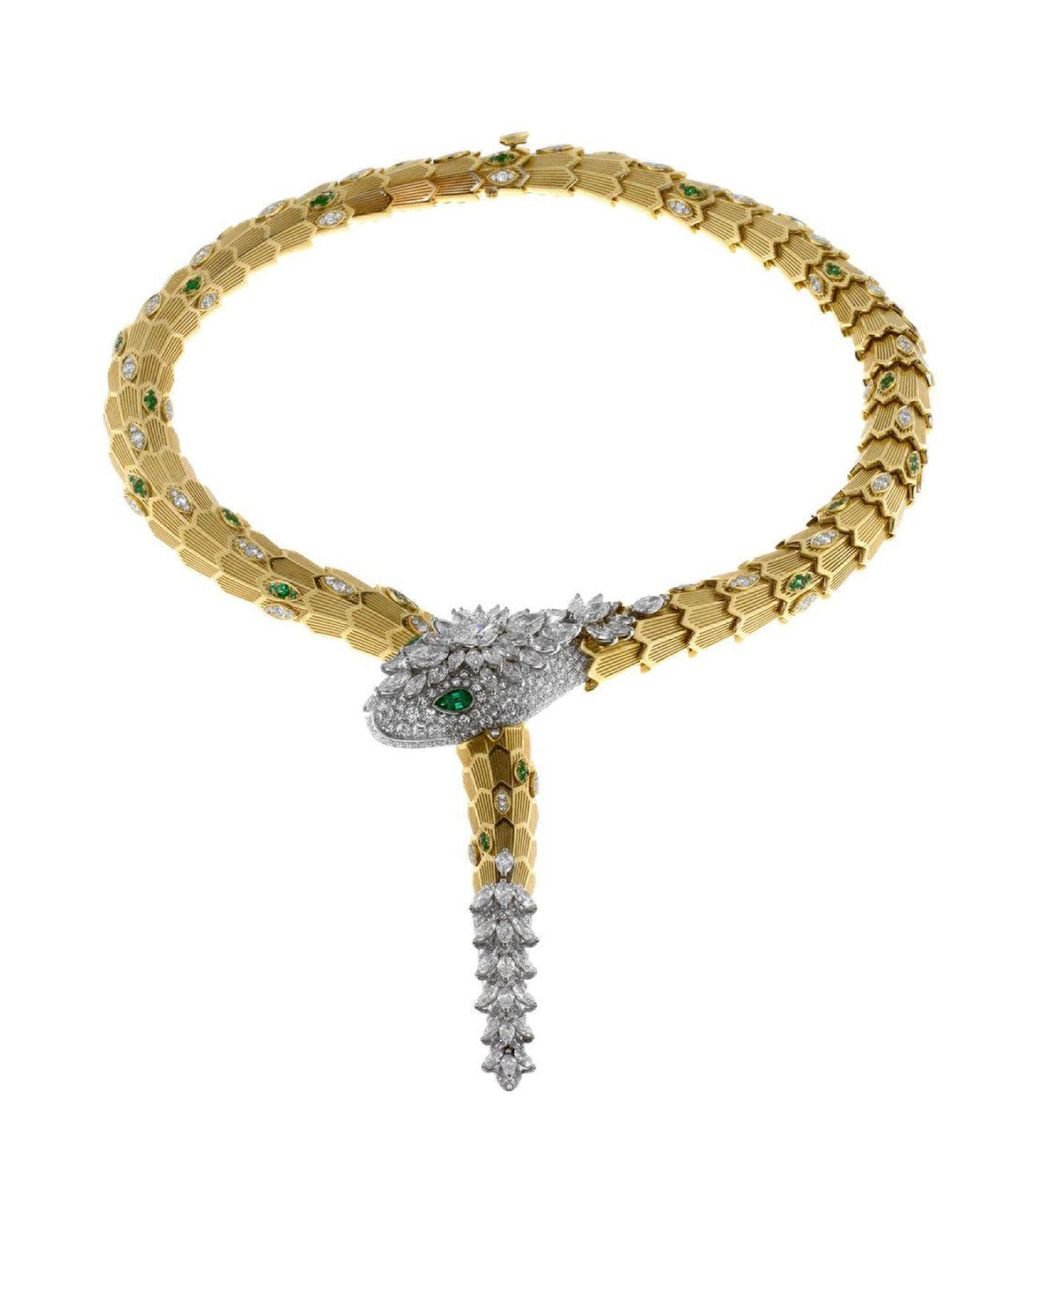 Naomi Watts Wears a Gorgeous Jeweled Snake Necklace to Bulgari Exhibit  Launch!: Photo 3103206 | Naomi Watts Photos | Just Jared: Entertainment News